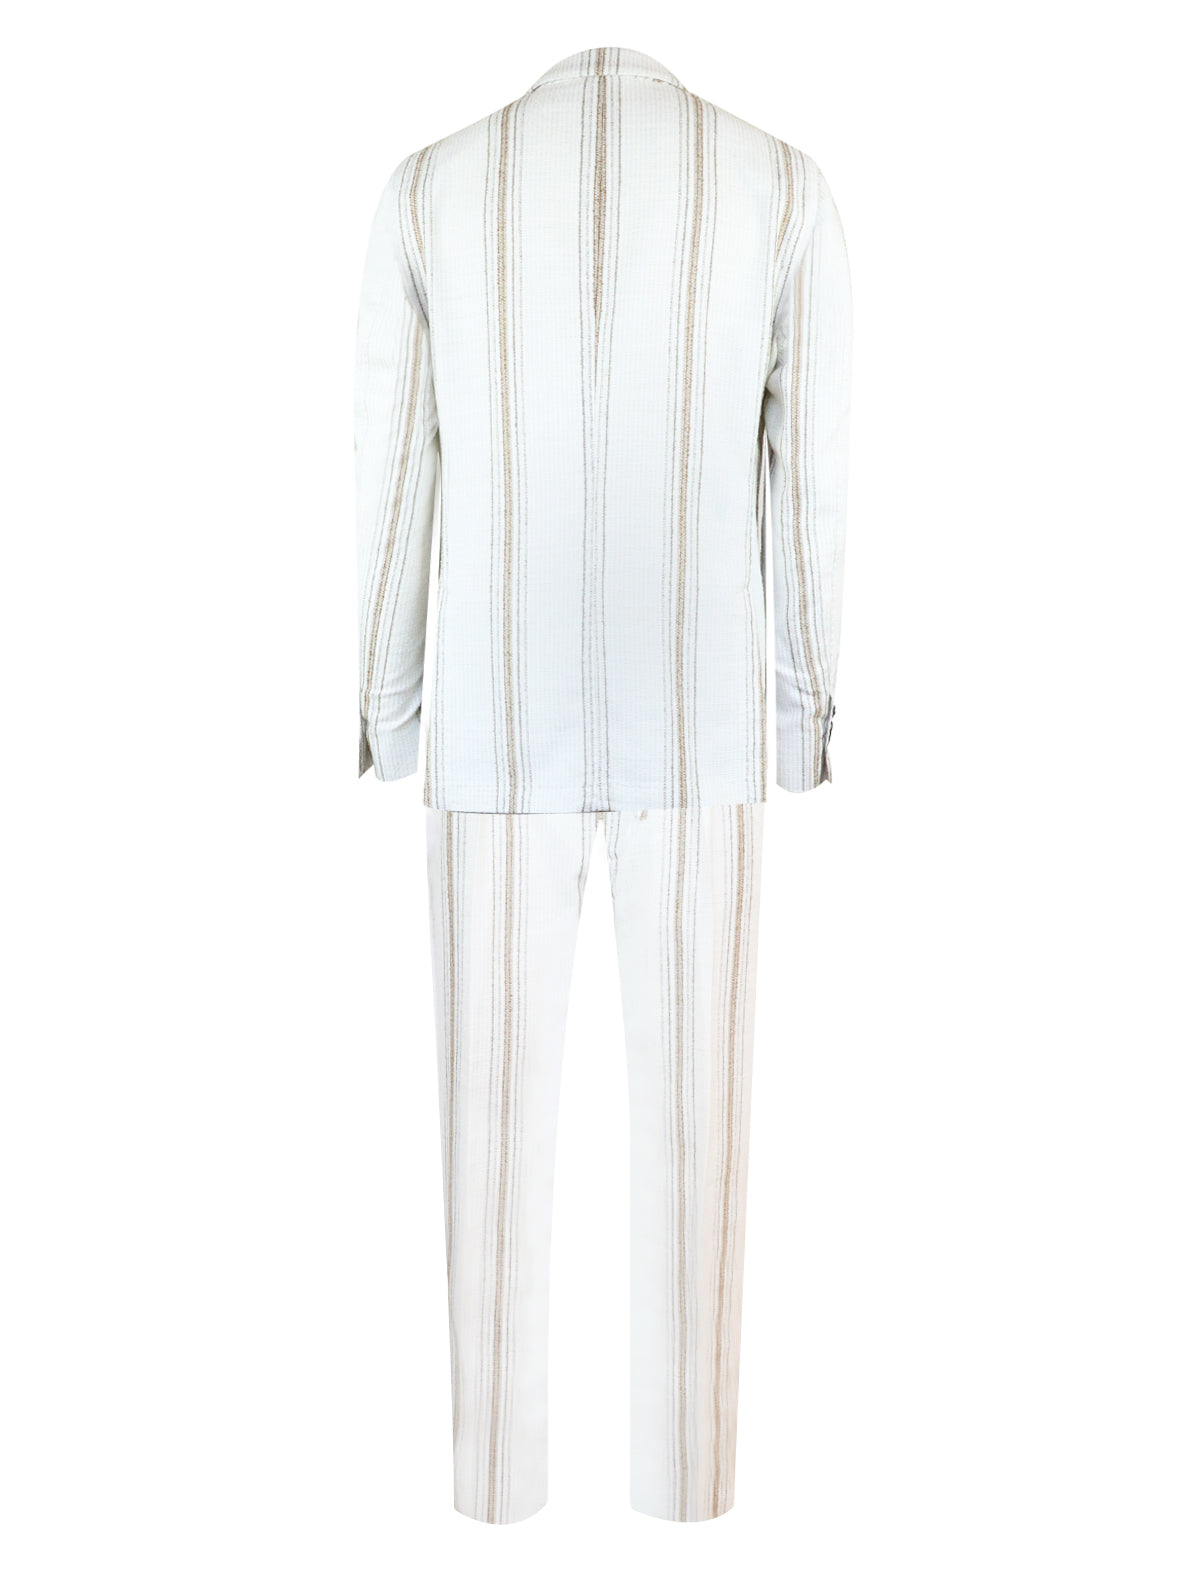 GABRIELE PASINI 2-Piece Suit in White Beige Stripes